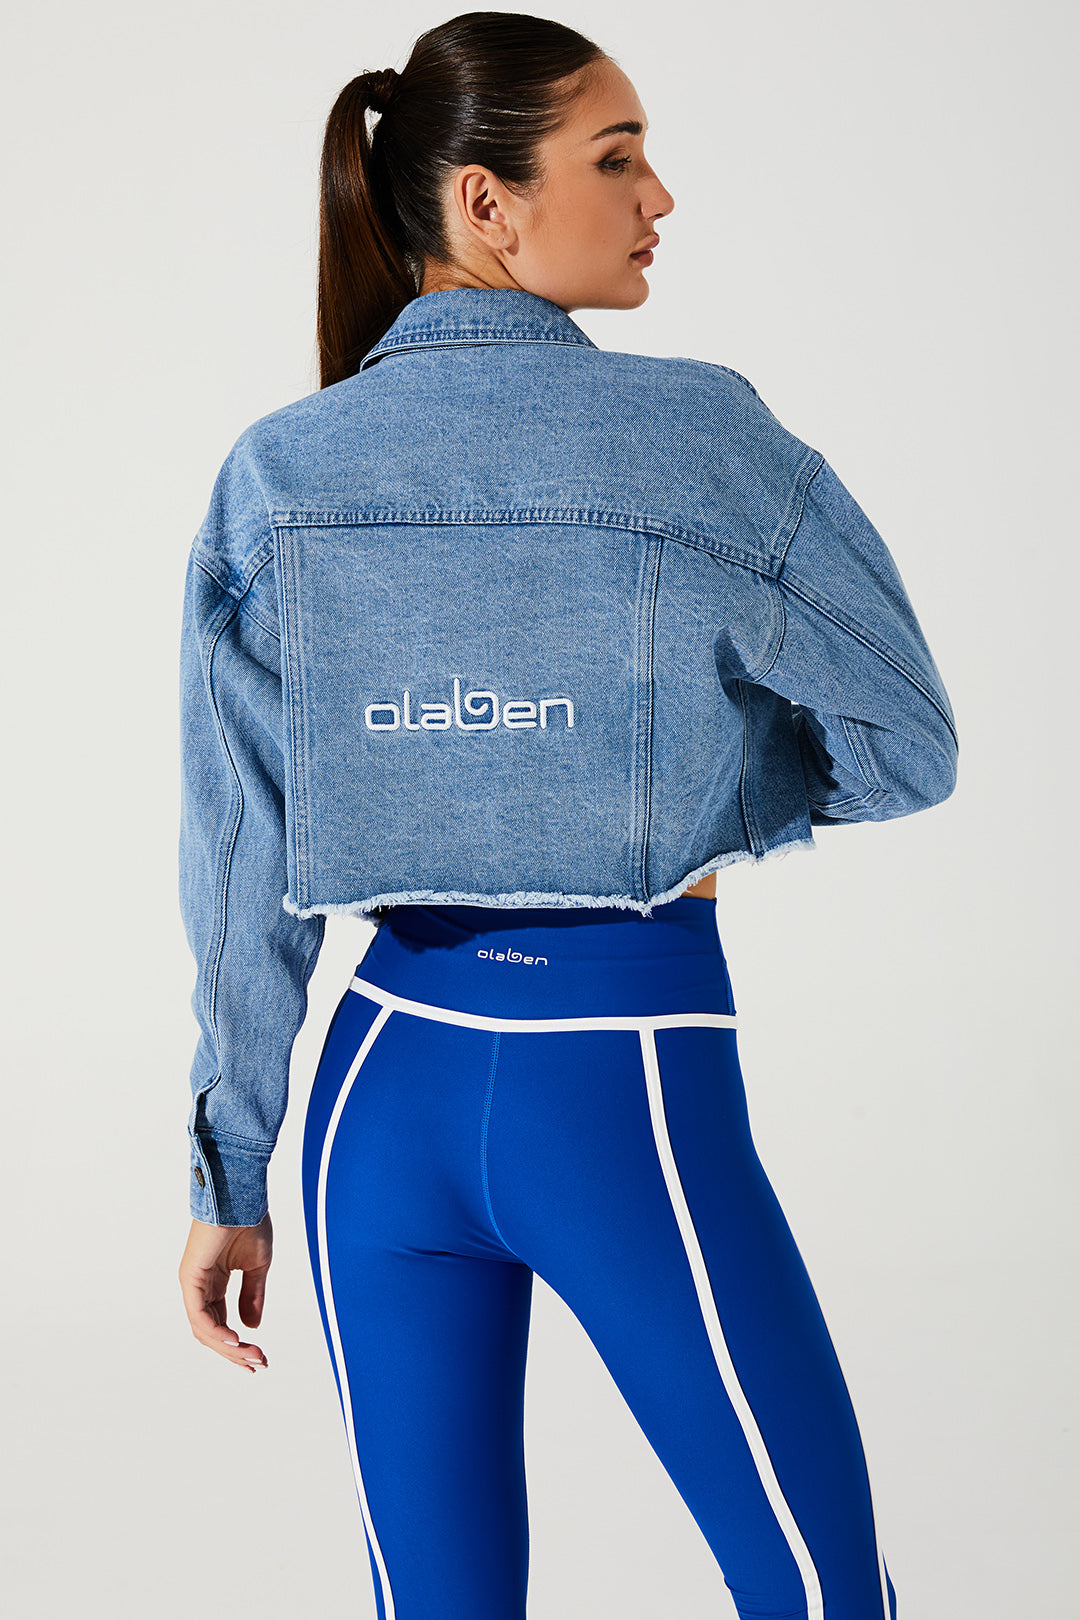 Stylish blue denim jacket for women by Modedamour - OW-0035-WJK-BL - Image 3.